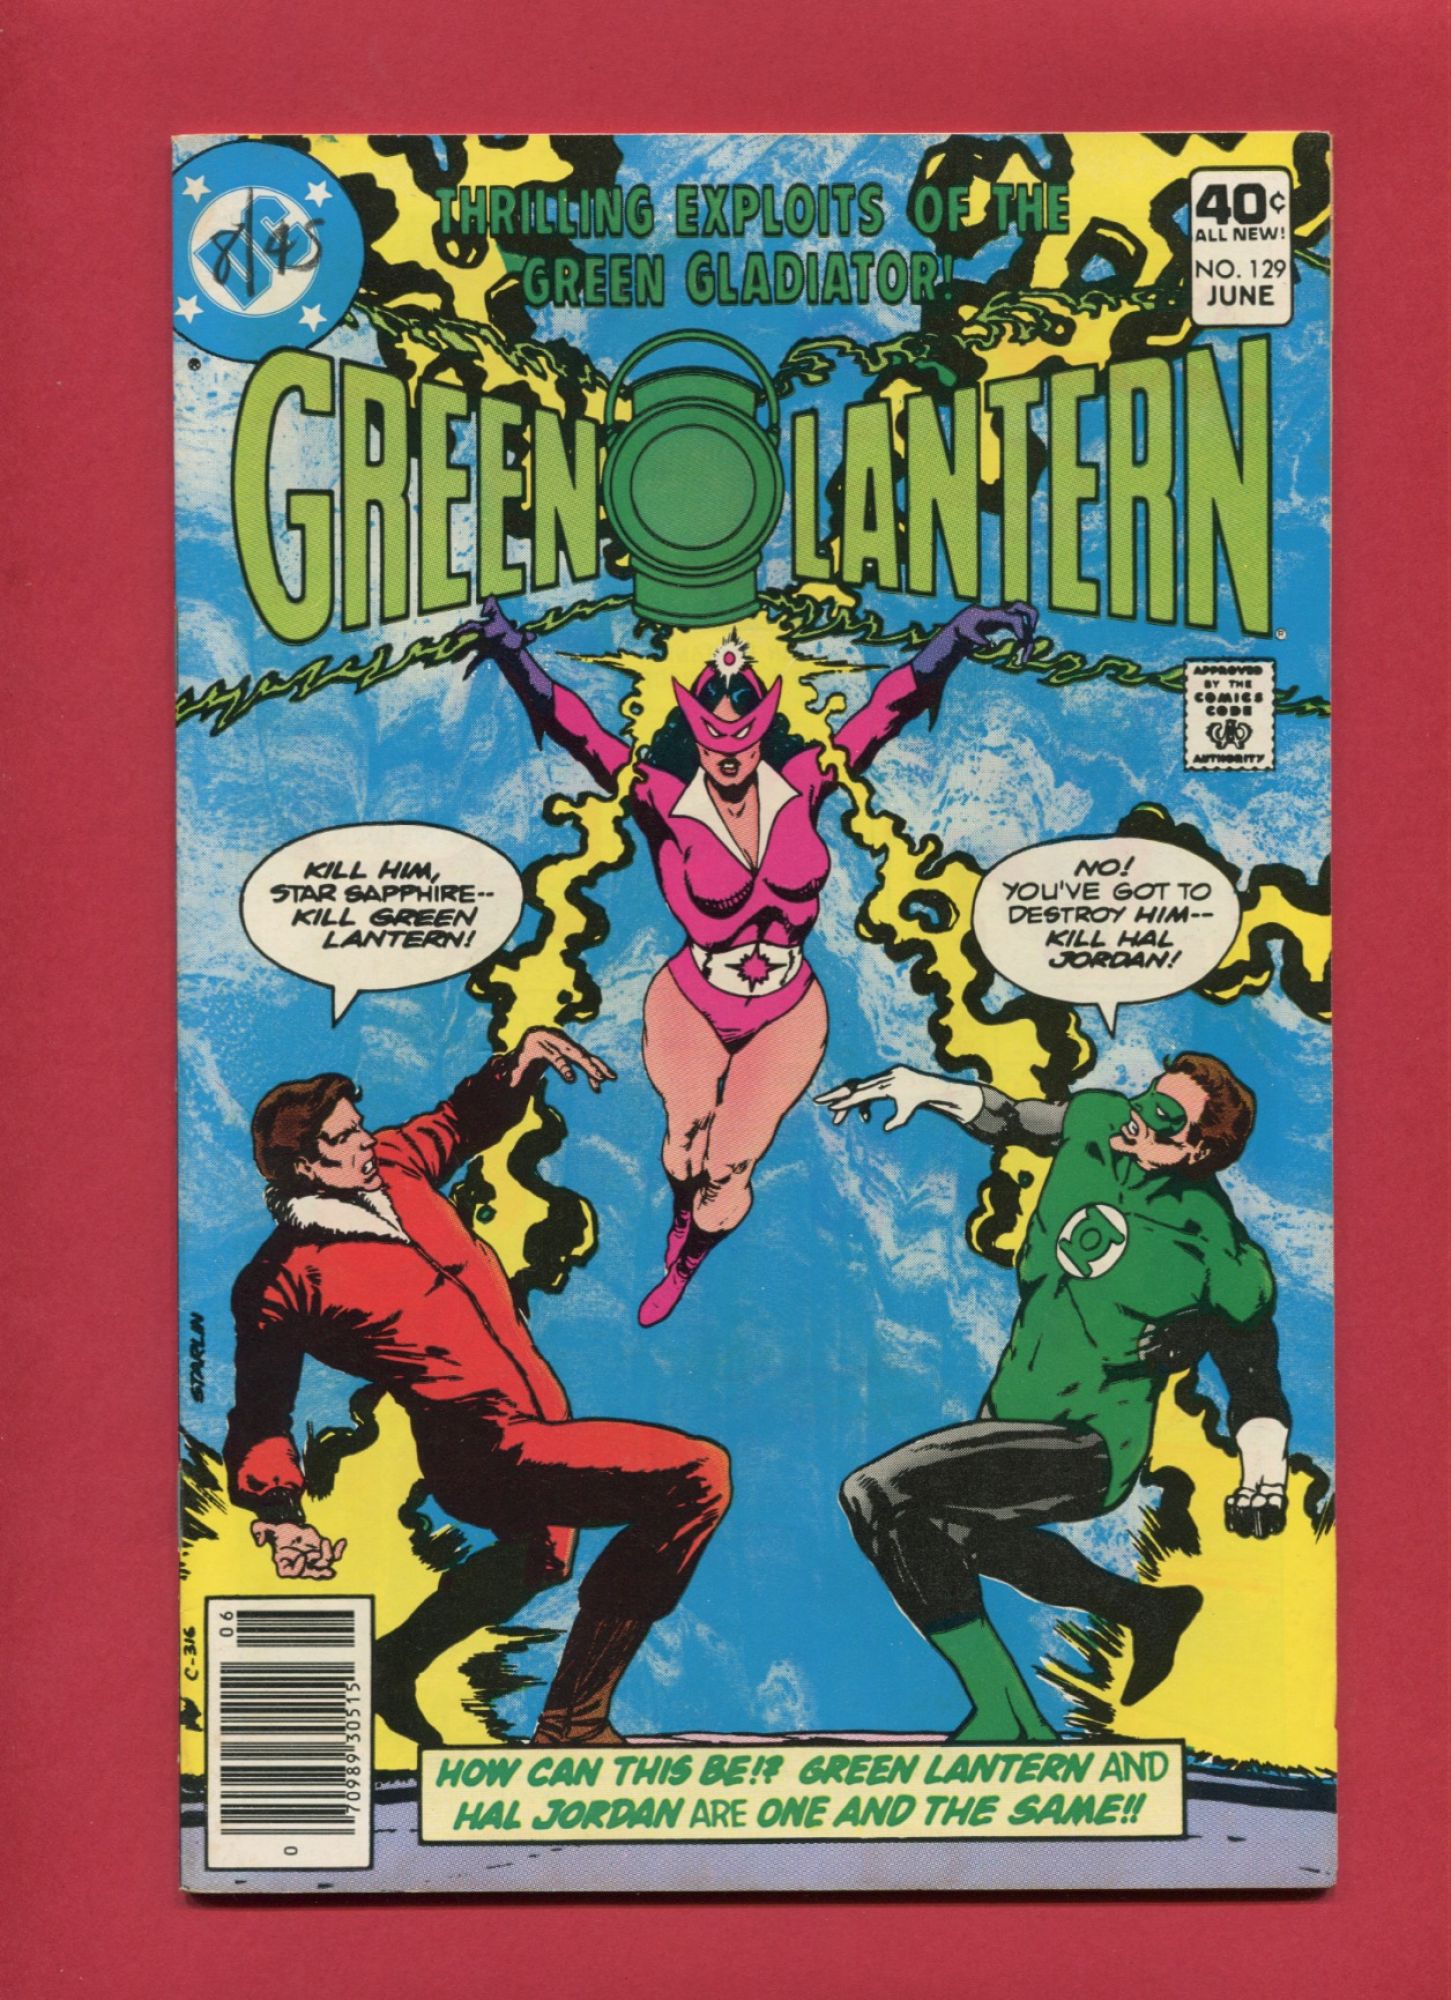 Green Lantern, #129, Jun 1980, 8.0 VF